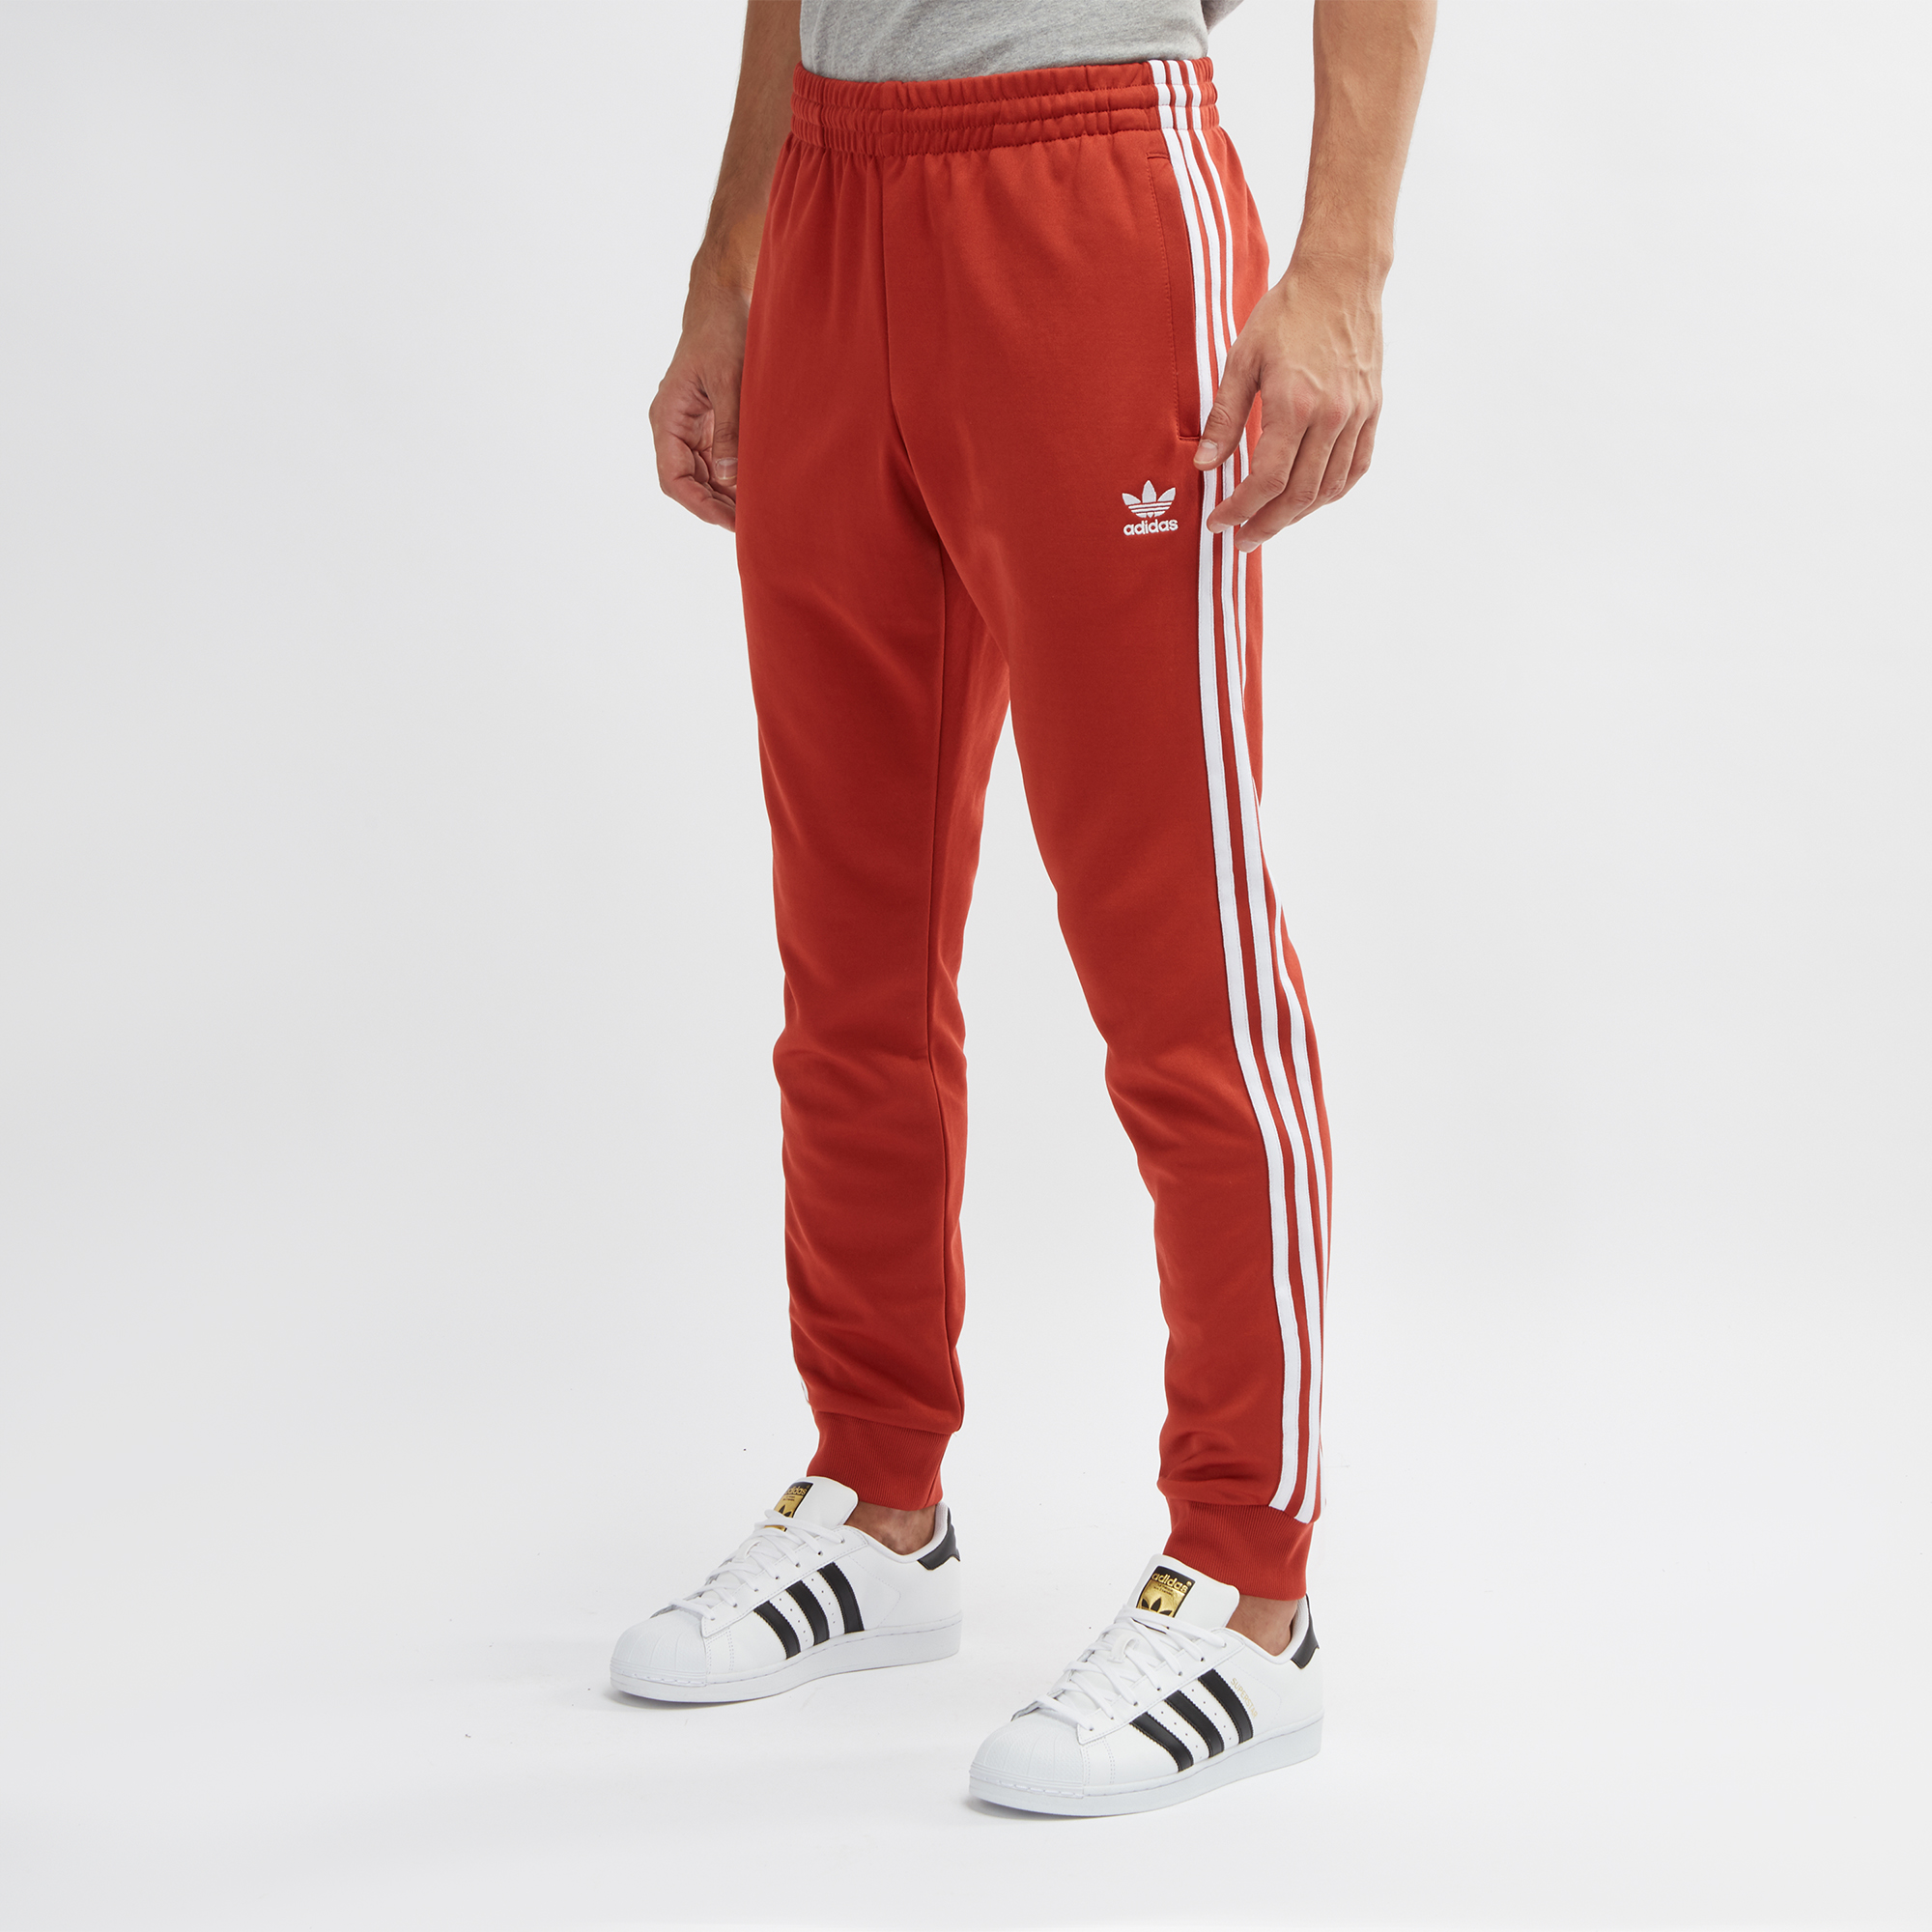 Orange adidas Originals SST Track Pants | Track Pants | Pants ...